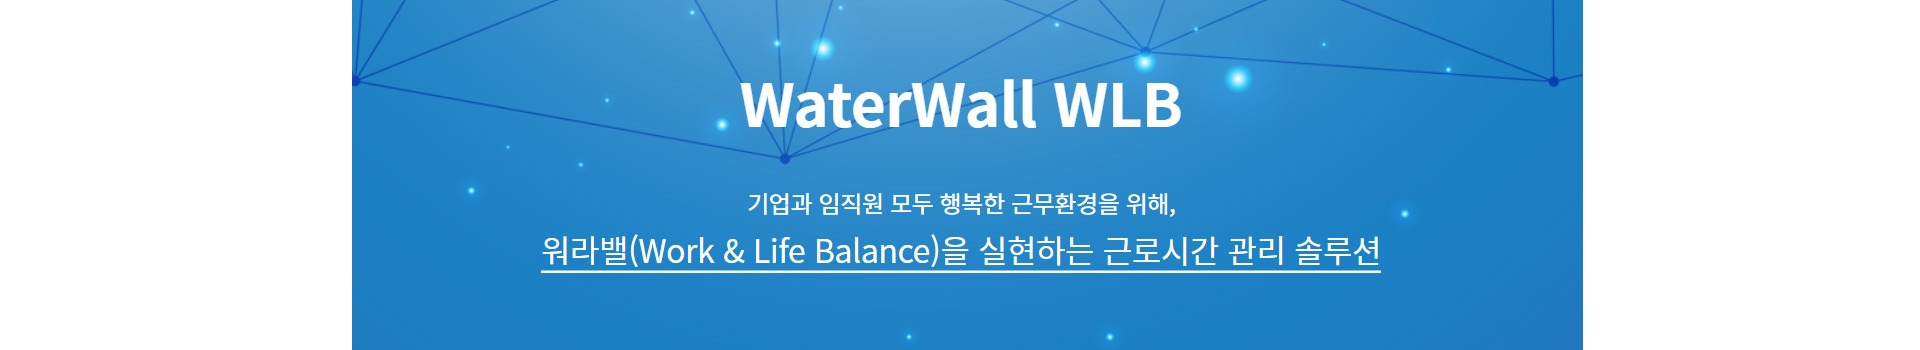 WaterWall WLB